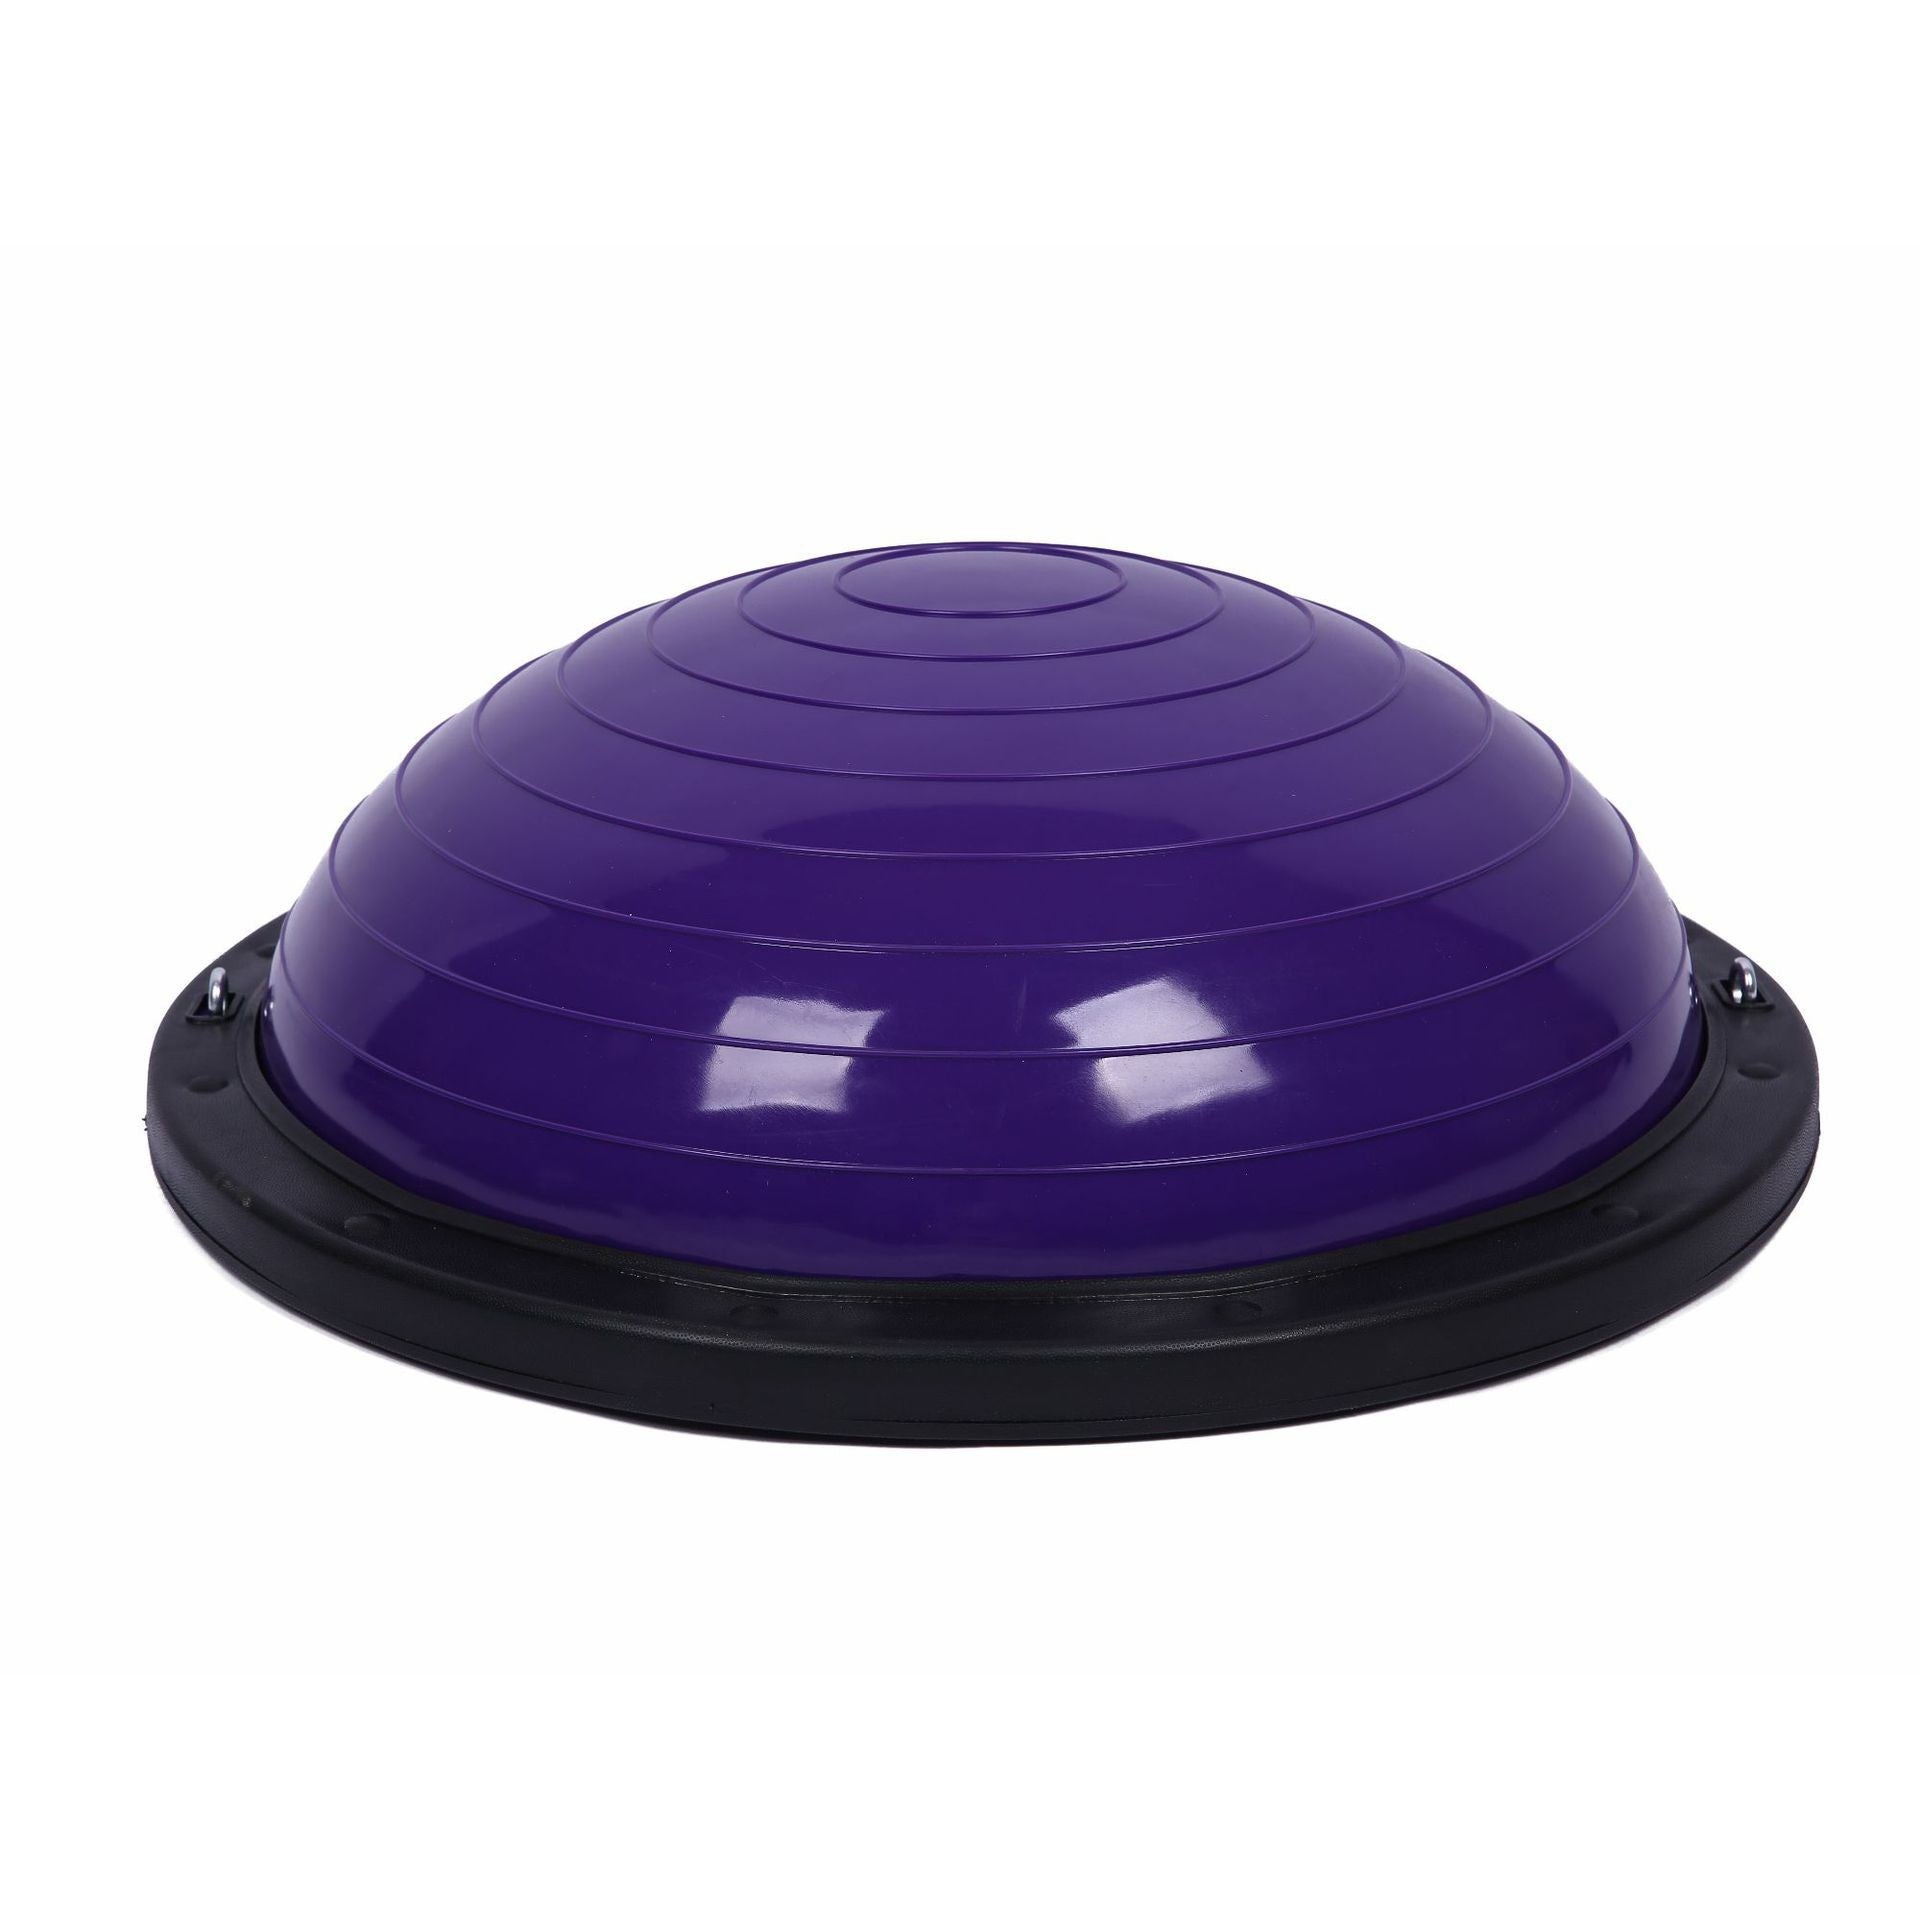 Bosu Ball - Core Power Training Balance Exercise Pump PVC - Yoga Half Balance Ball with Hand Strip and Pump - Personal Hour for Yoga and Meditations 